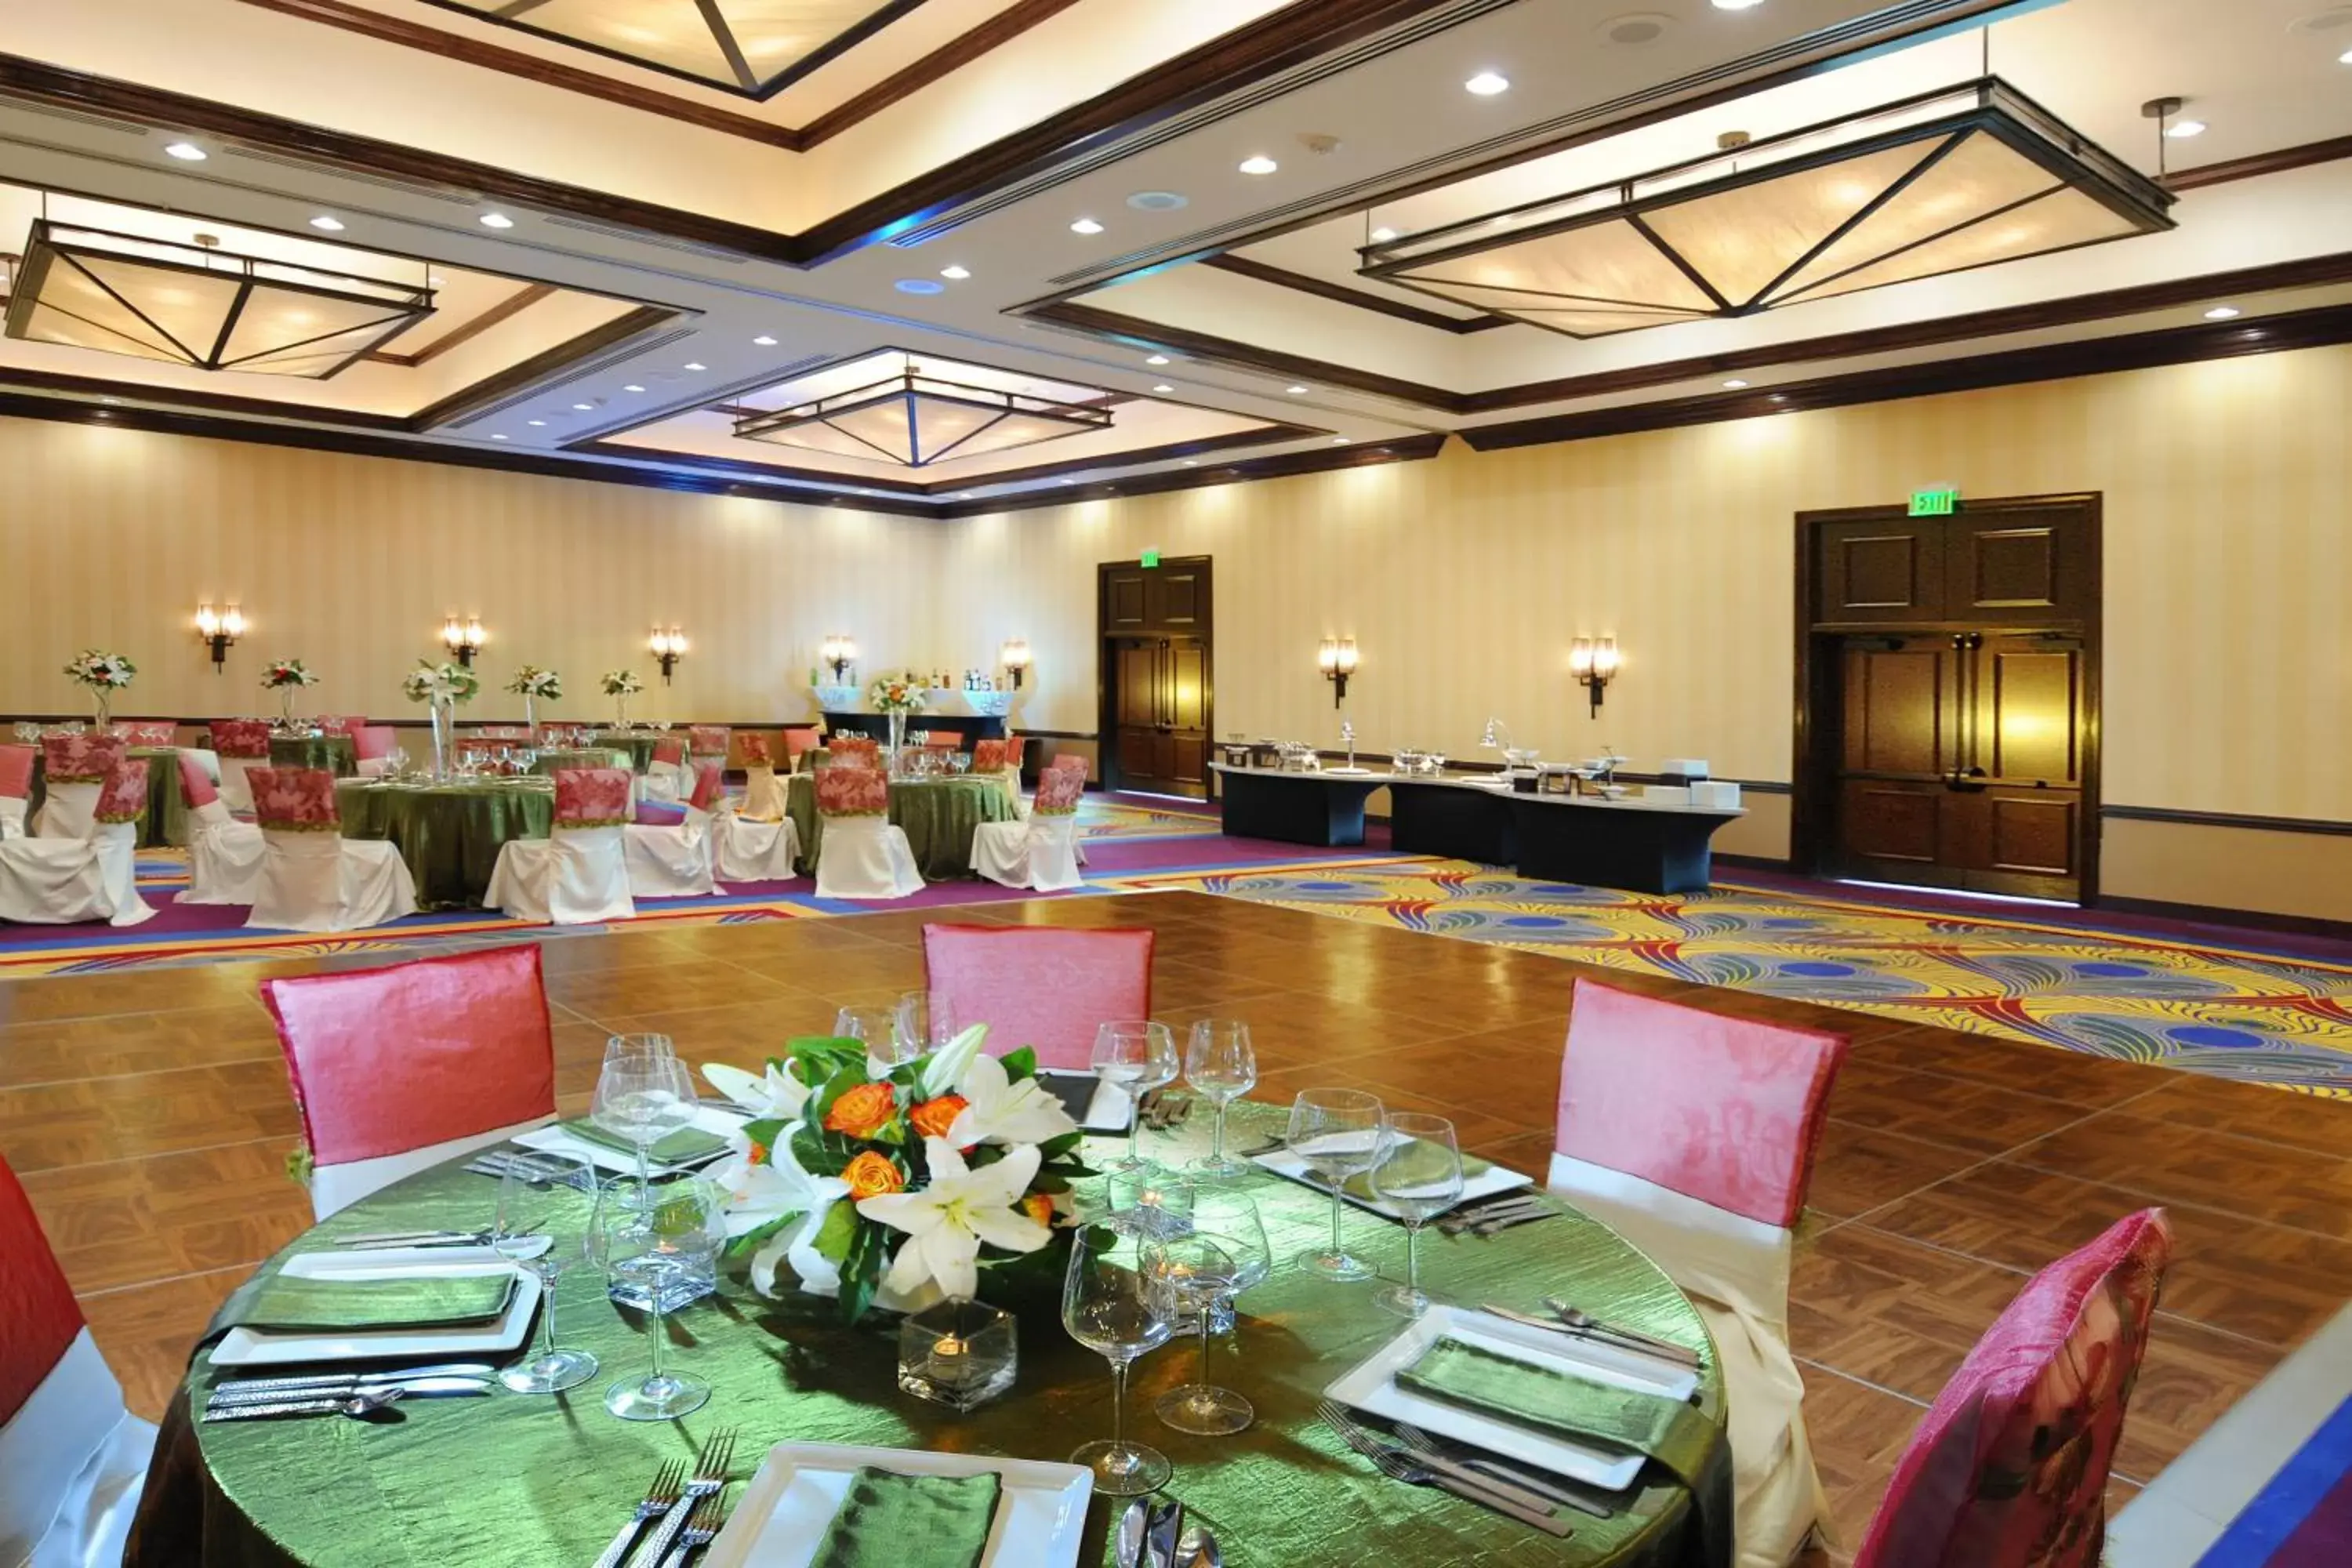 Meeting/conference room, Banquet Facilities in Houston Marriott Energy Corridor